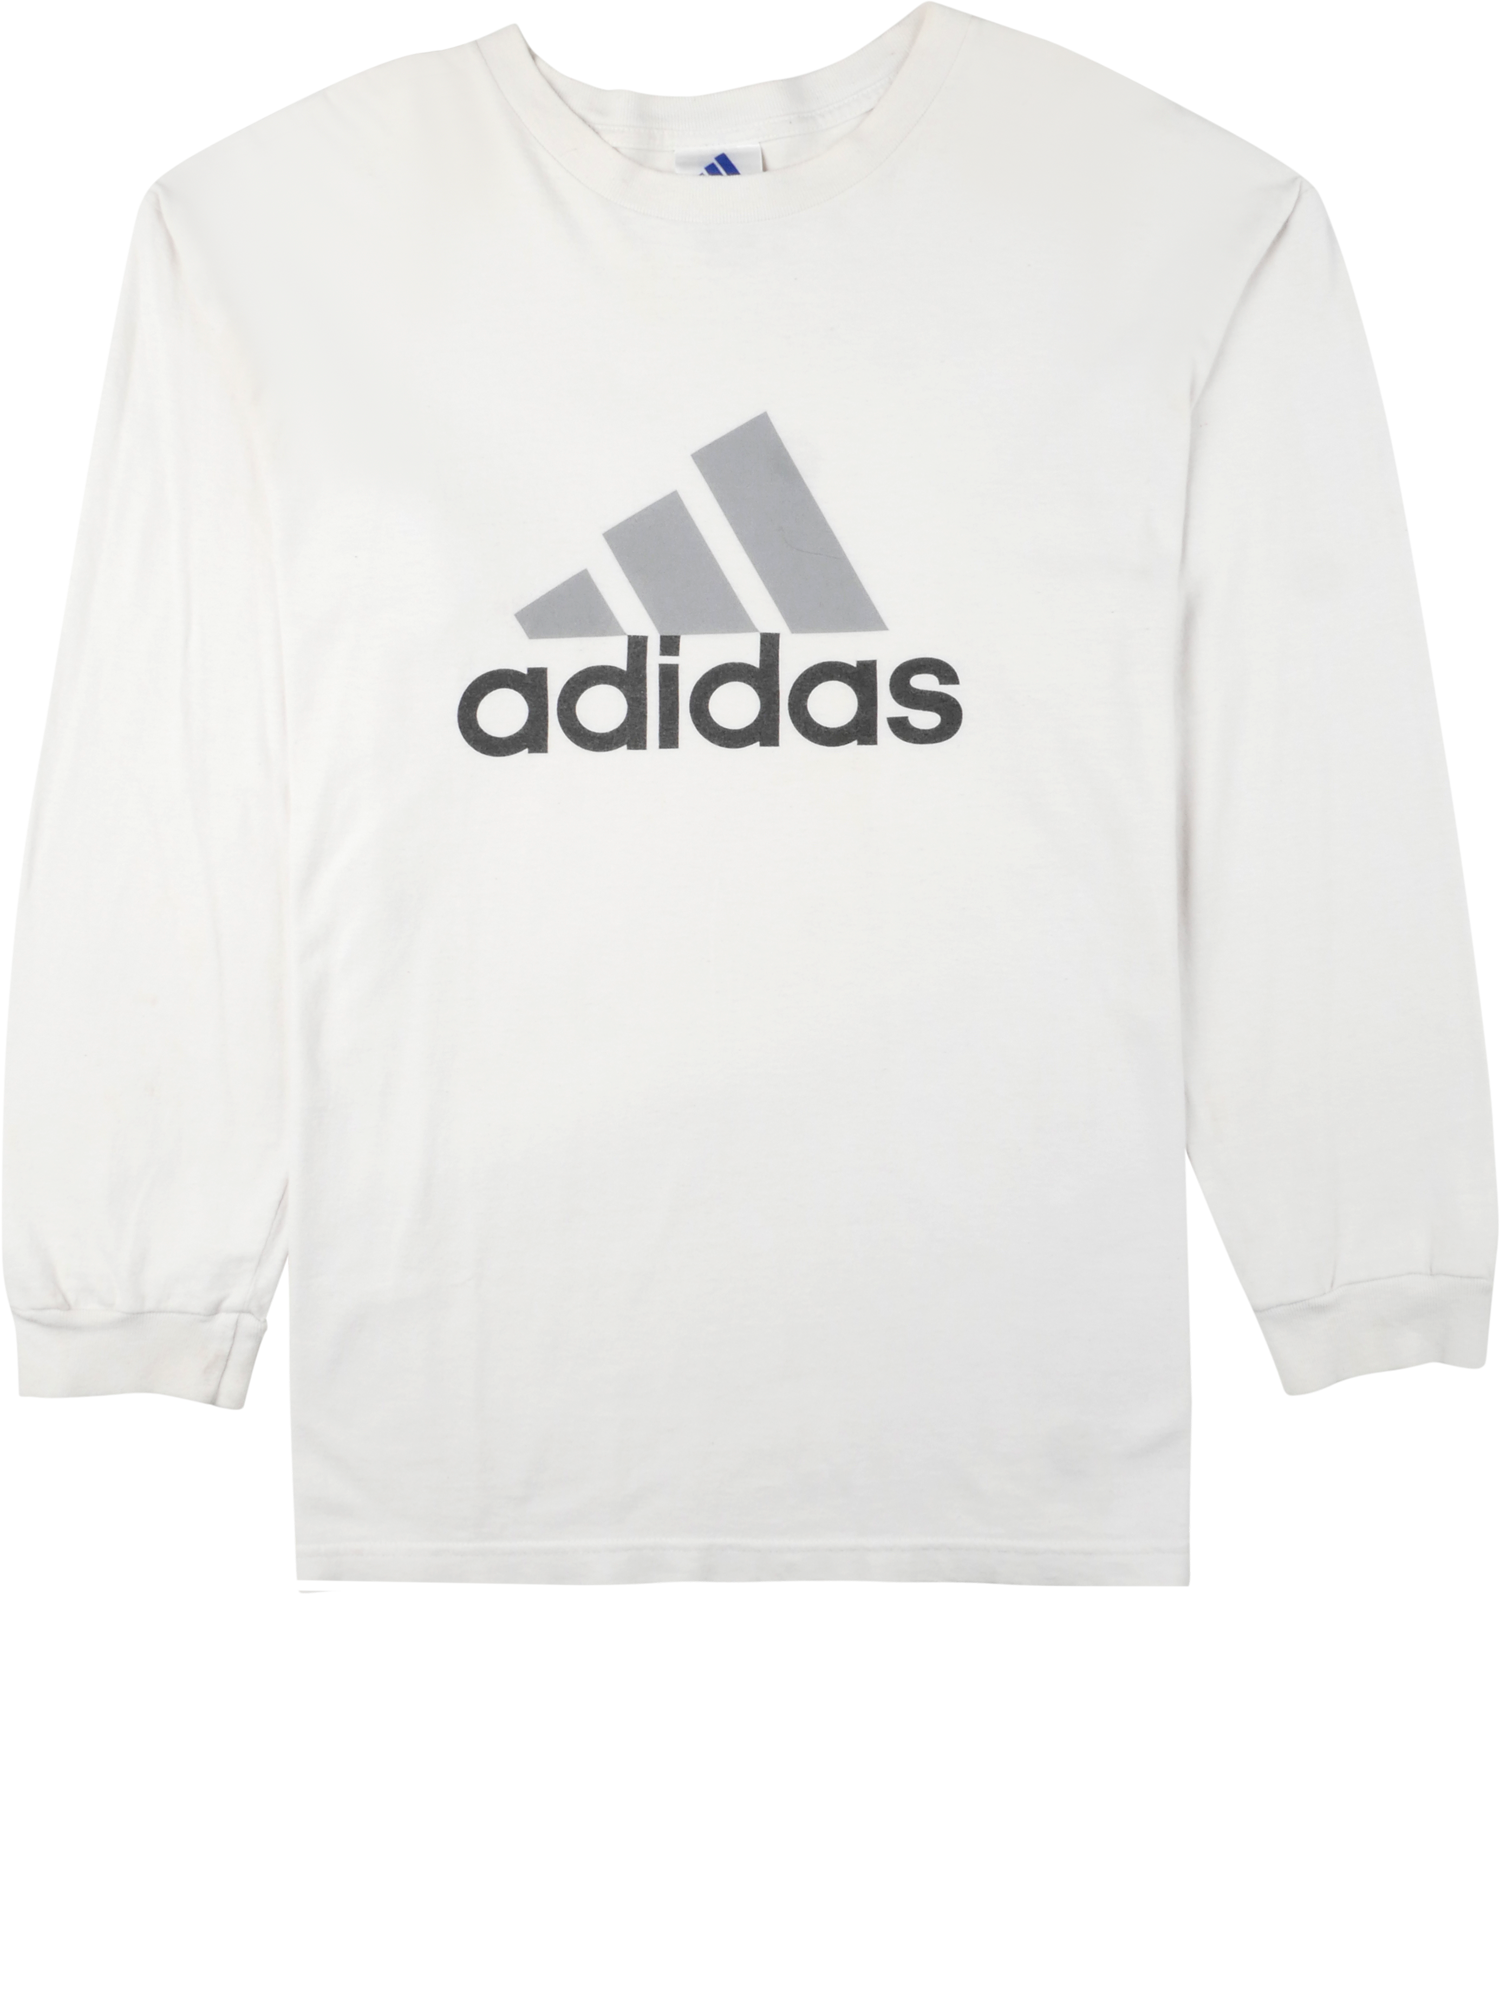 Adidas T-Shirt weiß